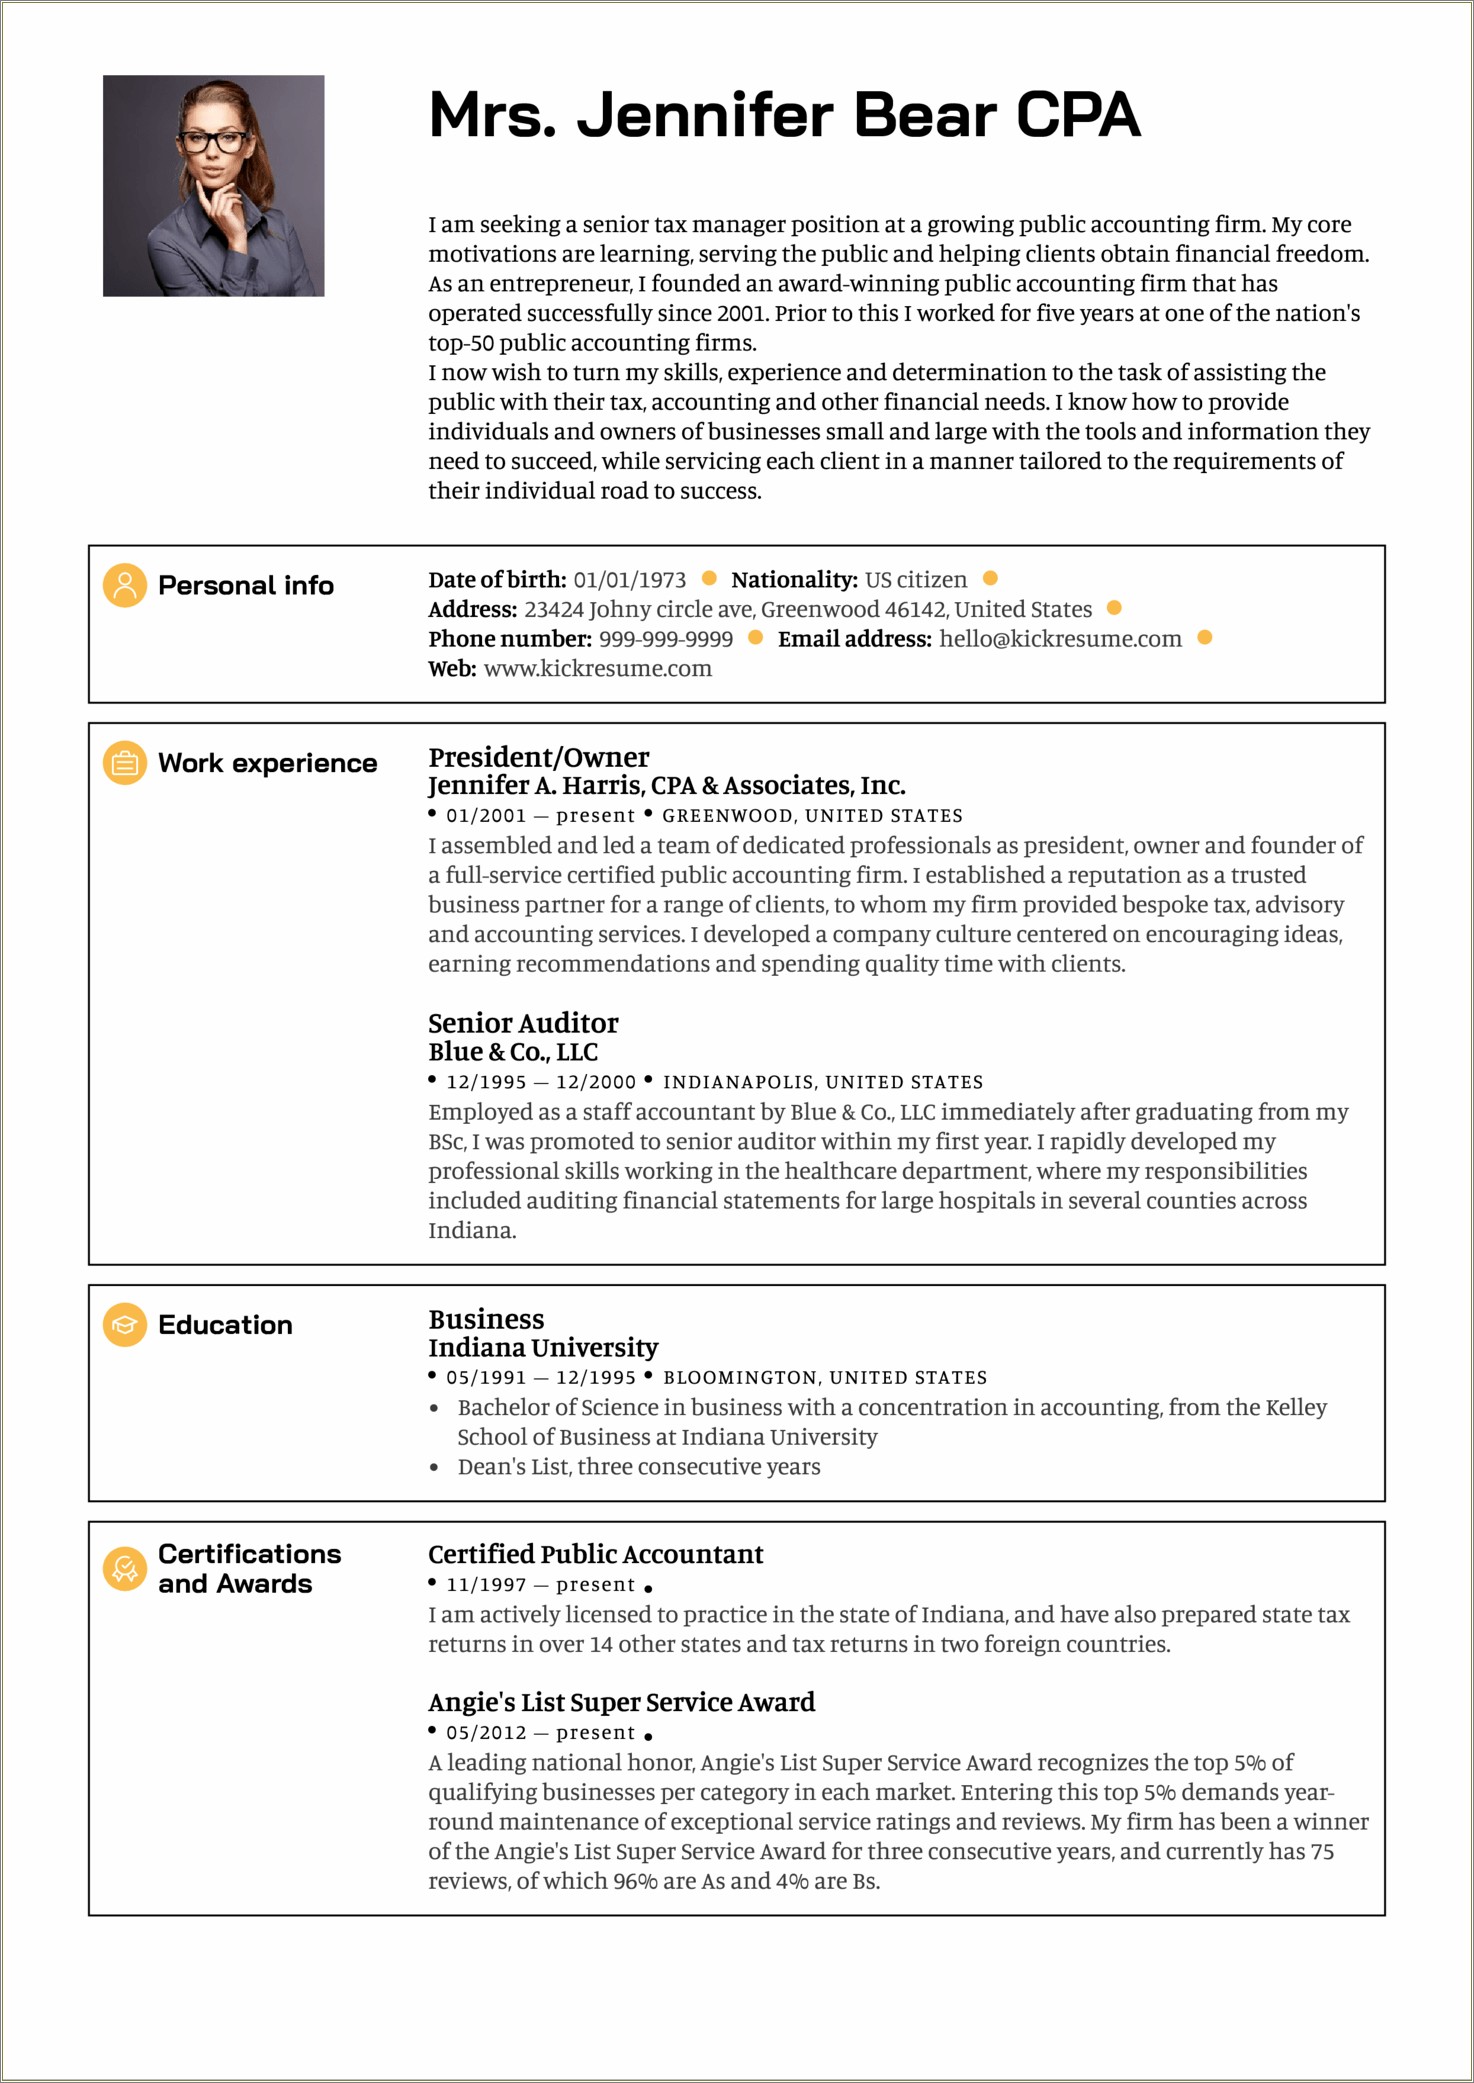 Sample Resume For Experienced Senior Executive